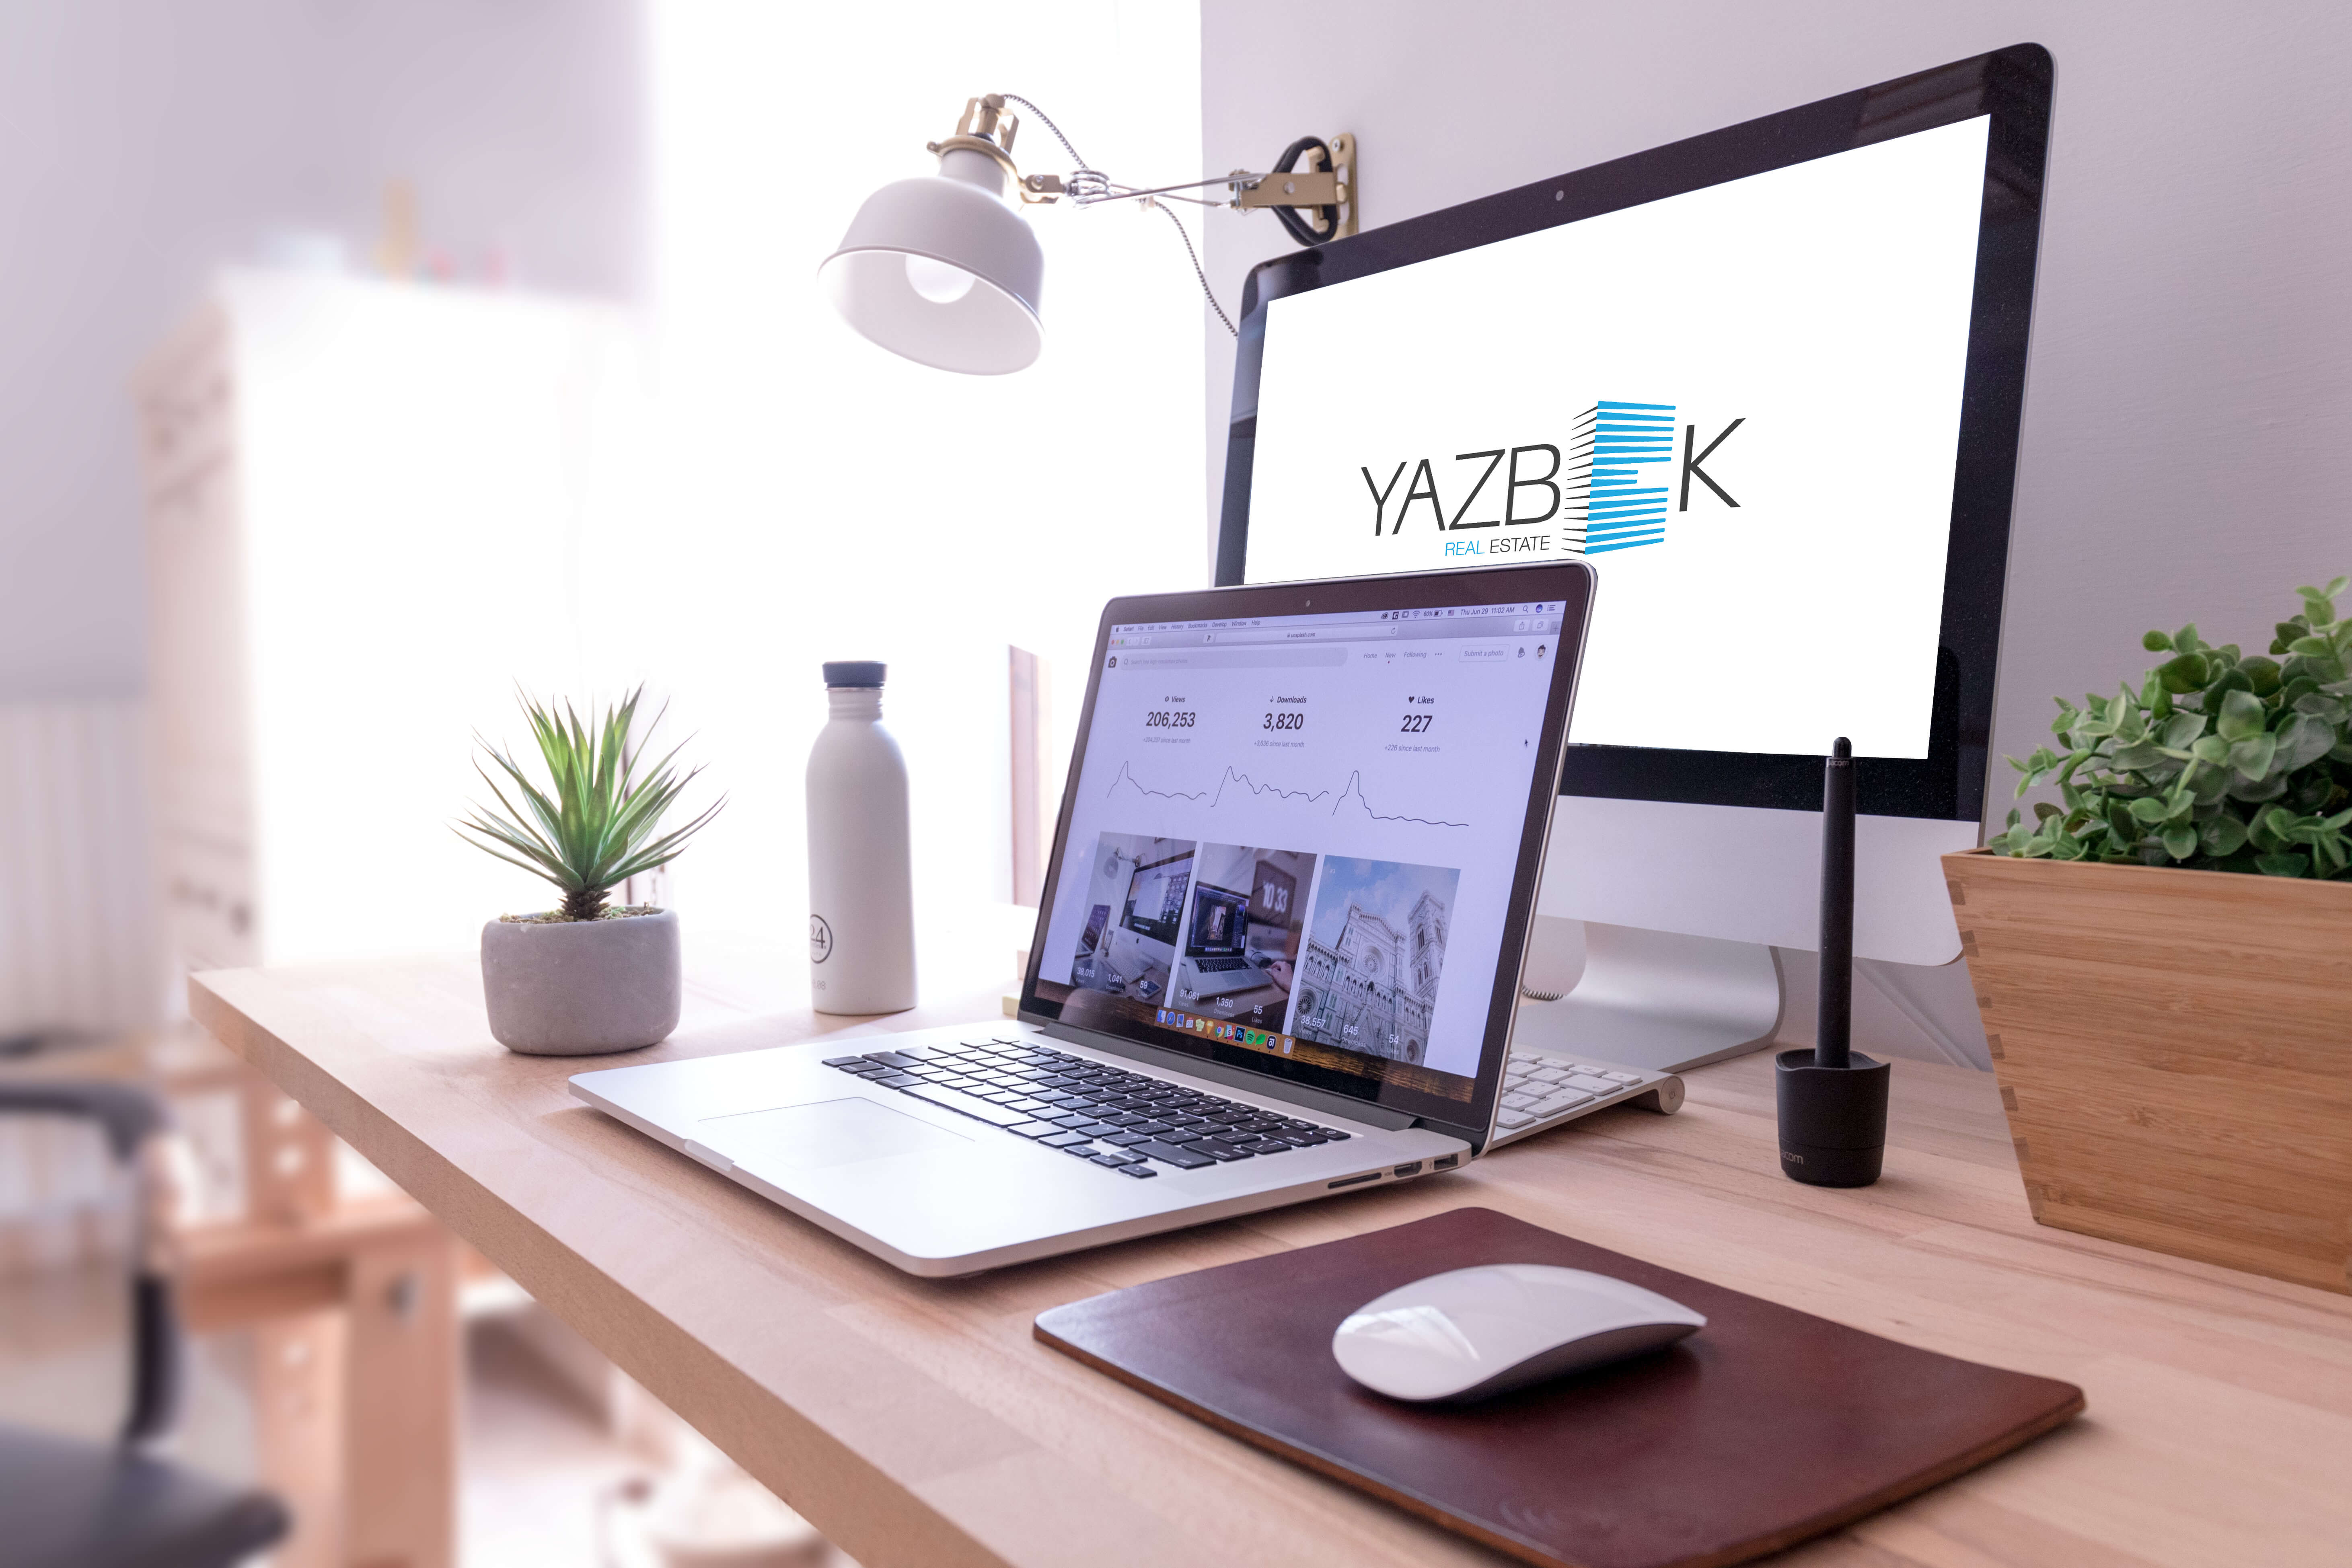 About Yazbek Real Estate